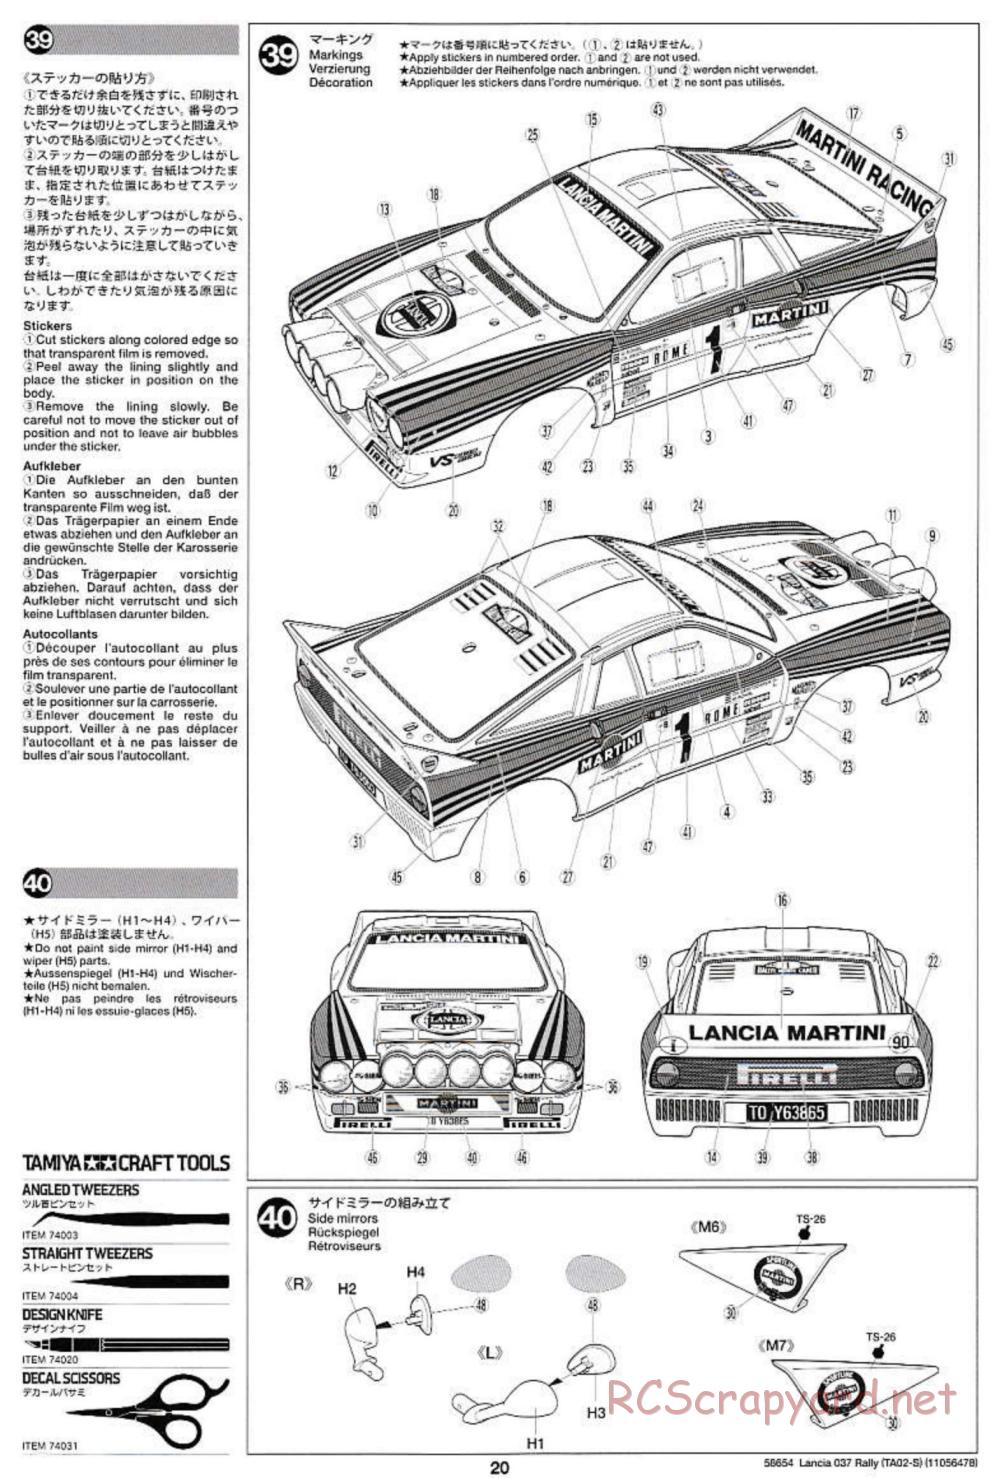 Tamiya - Lancia 037 Rally Chassis - Manual - Page 20